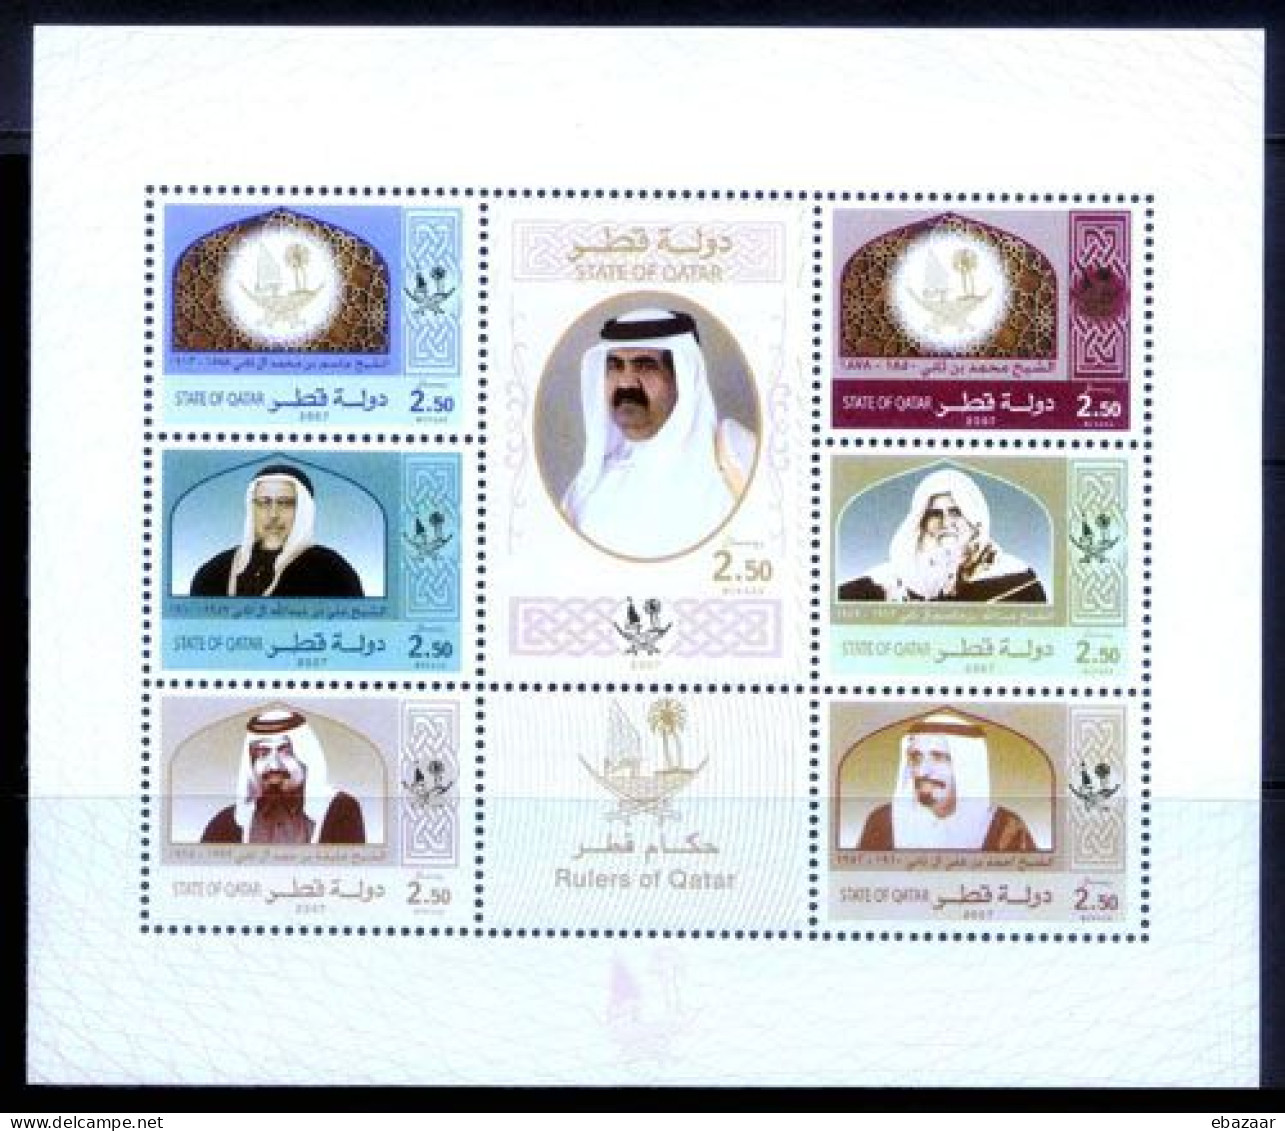 Qatar Rulers 2007 Stamps Sheet MNH - Qatar